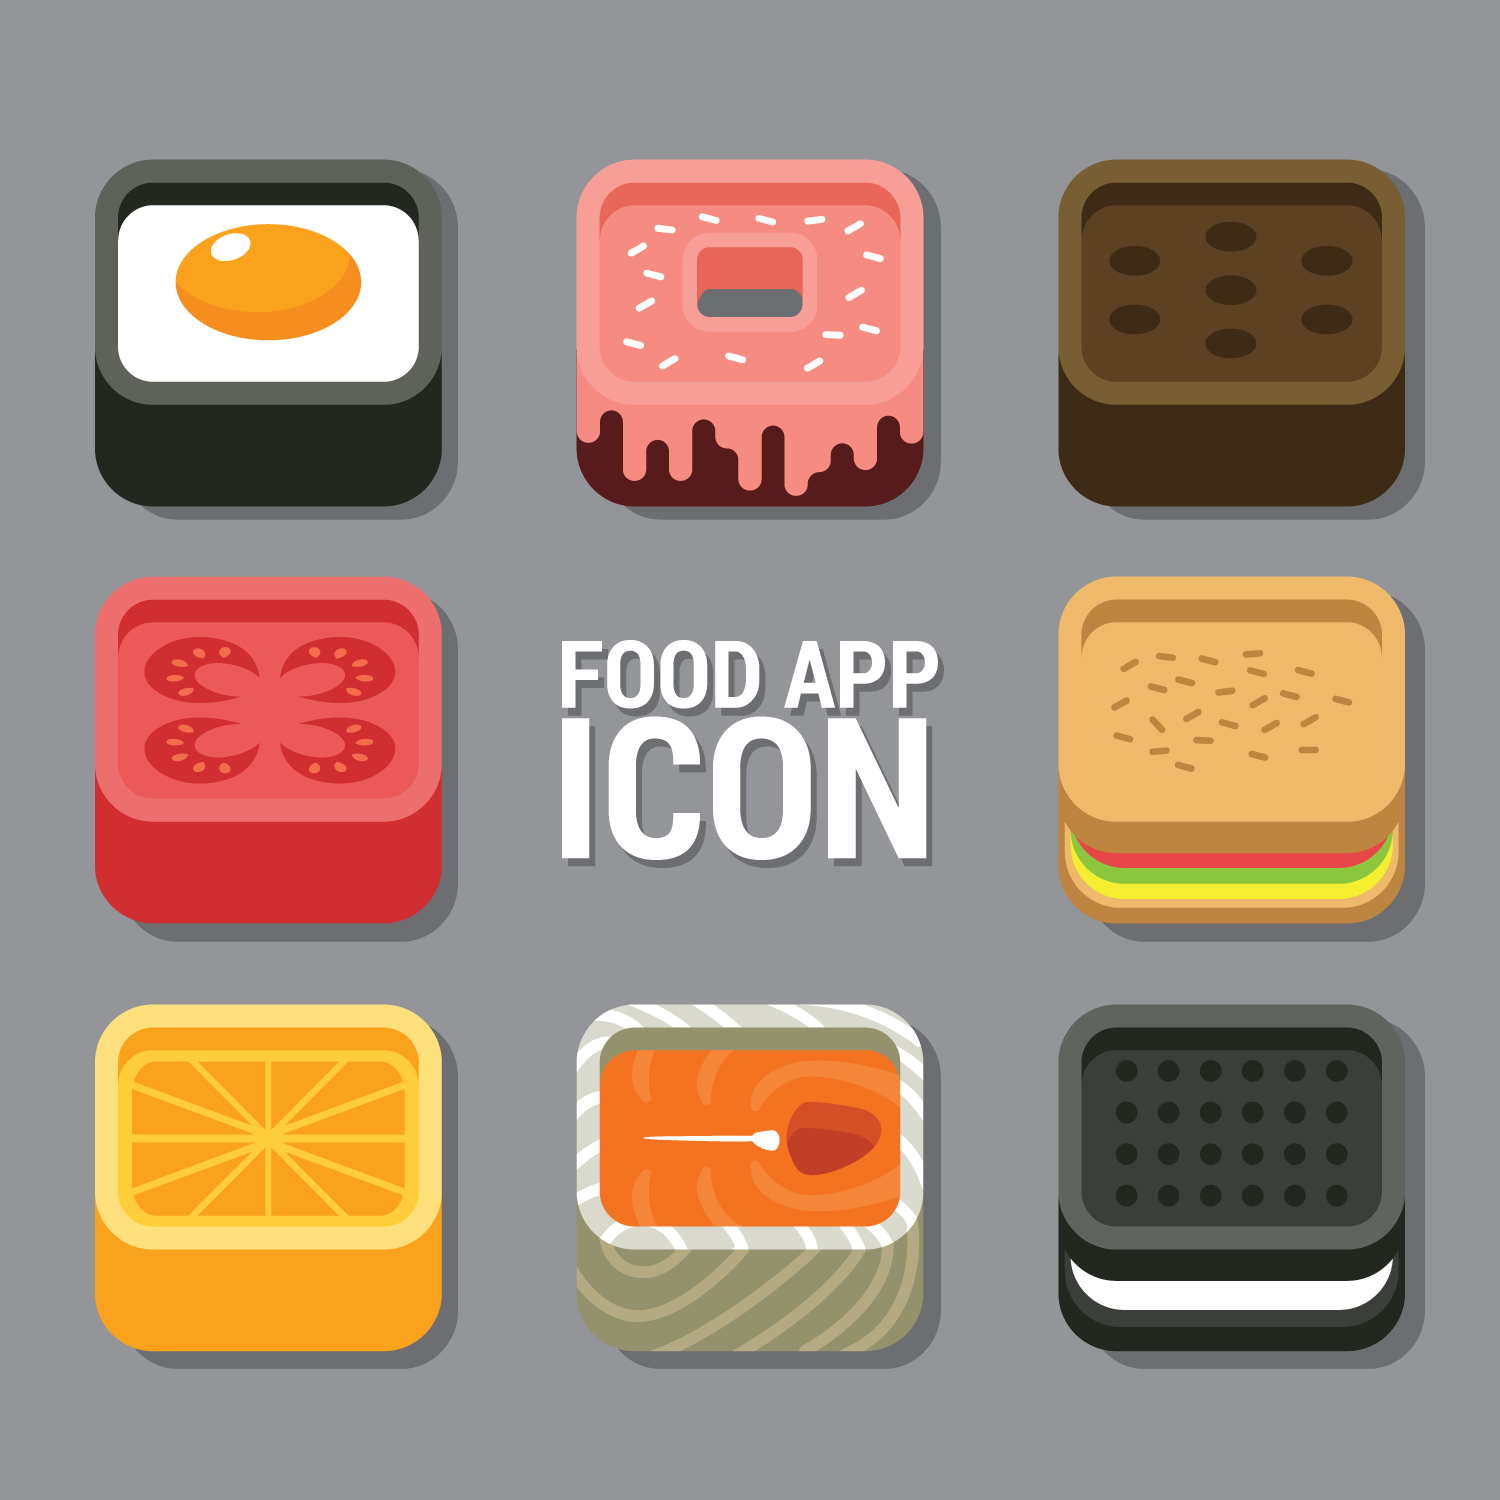 Food App Icon - Download Free Vectors, Clipart Graphics ...